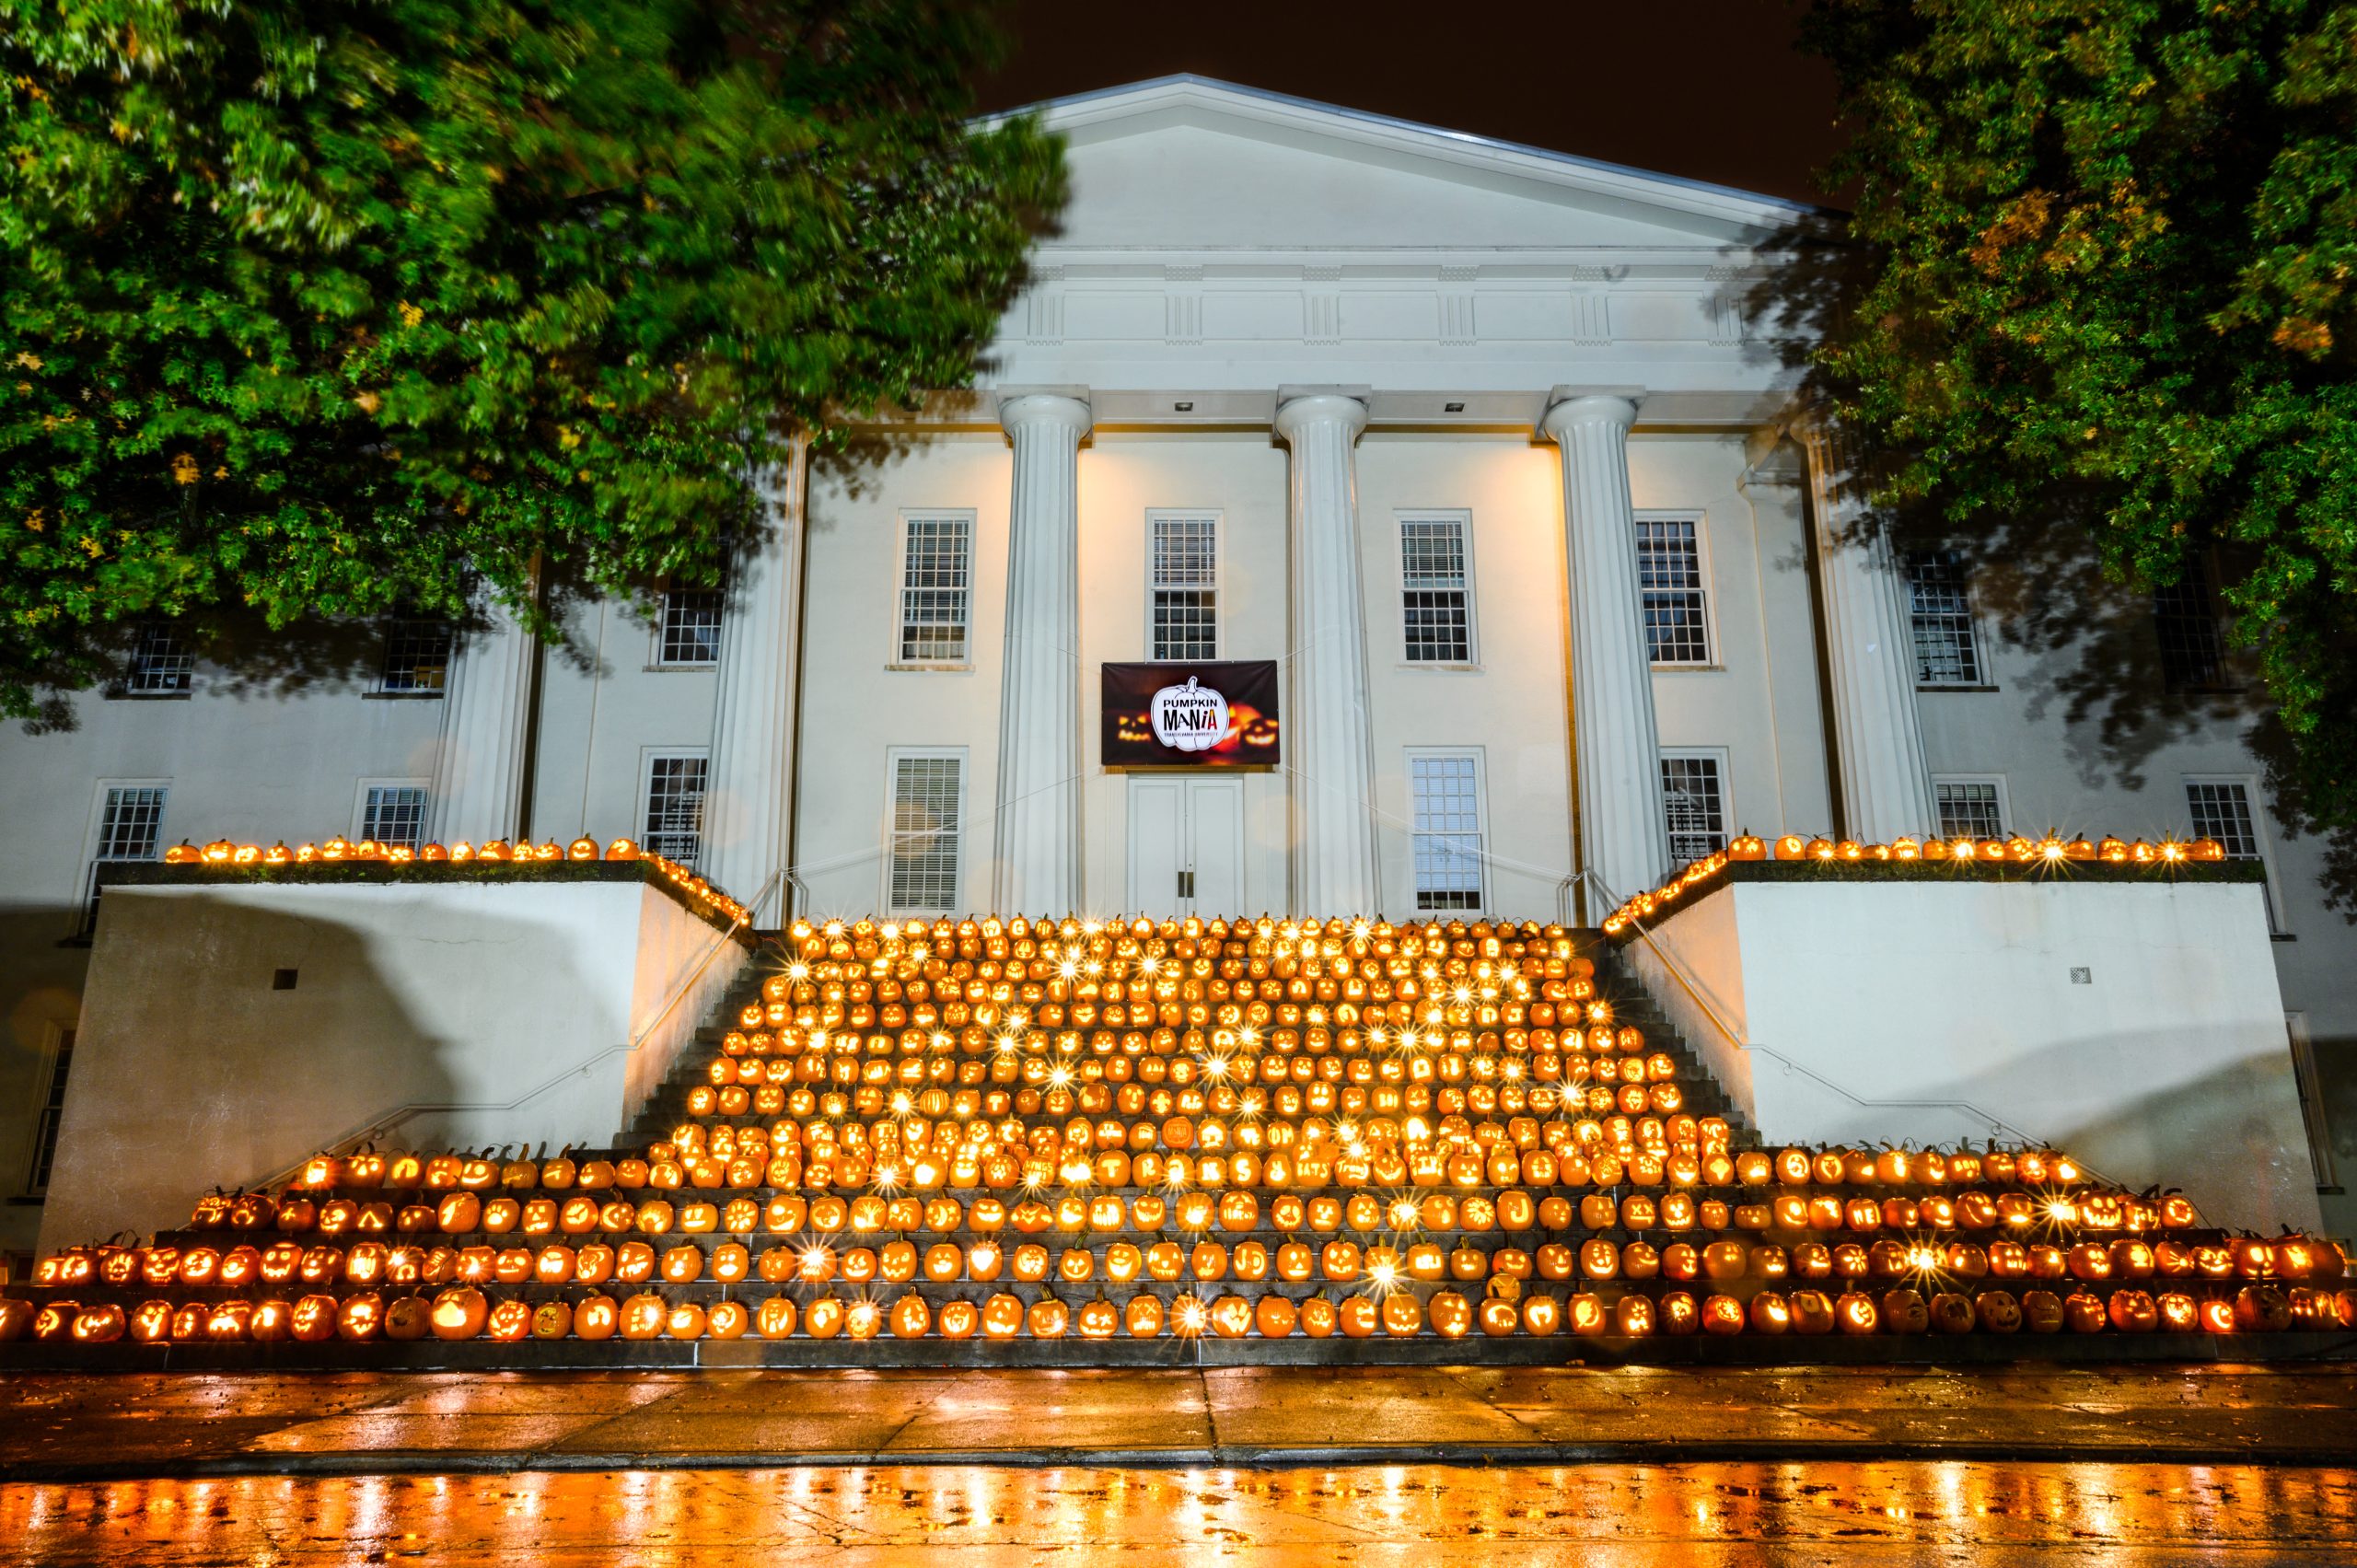 The annual PumpkinMania display glows in the night.